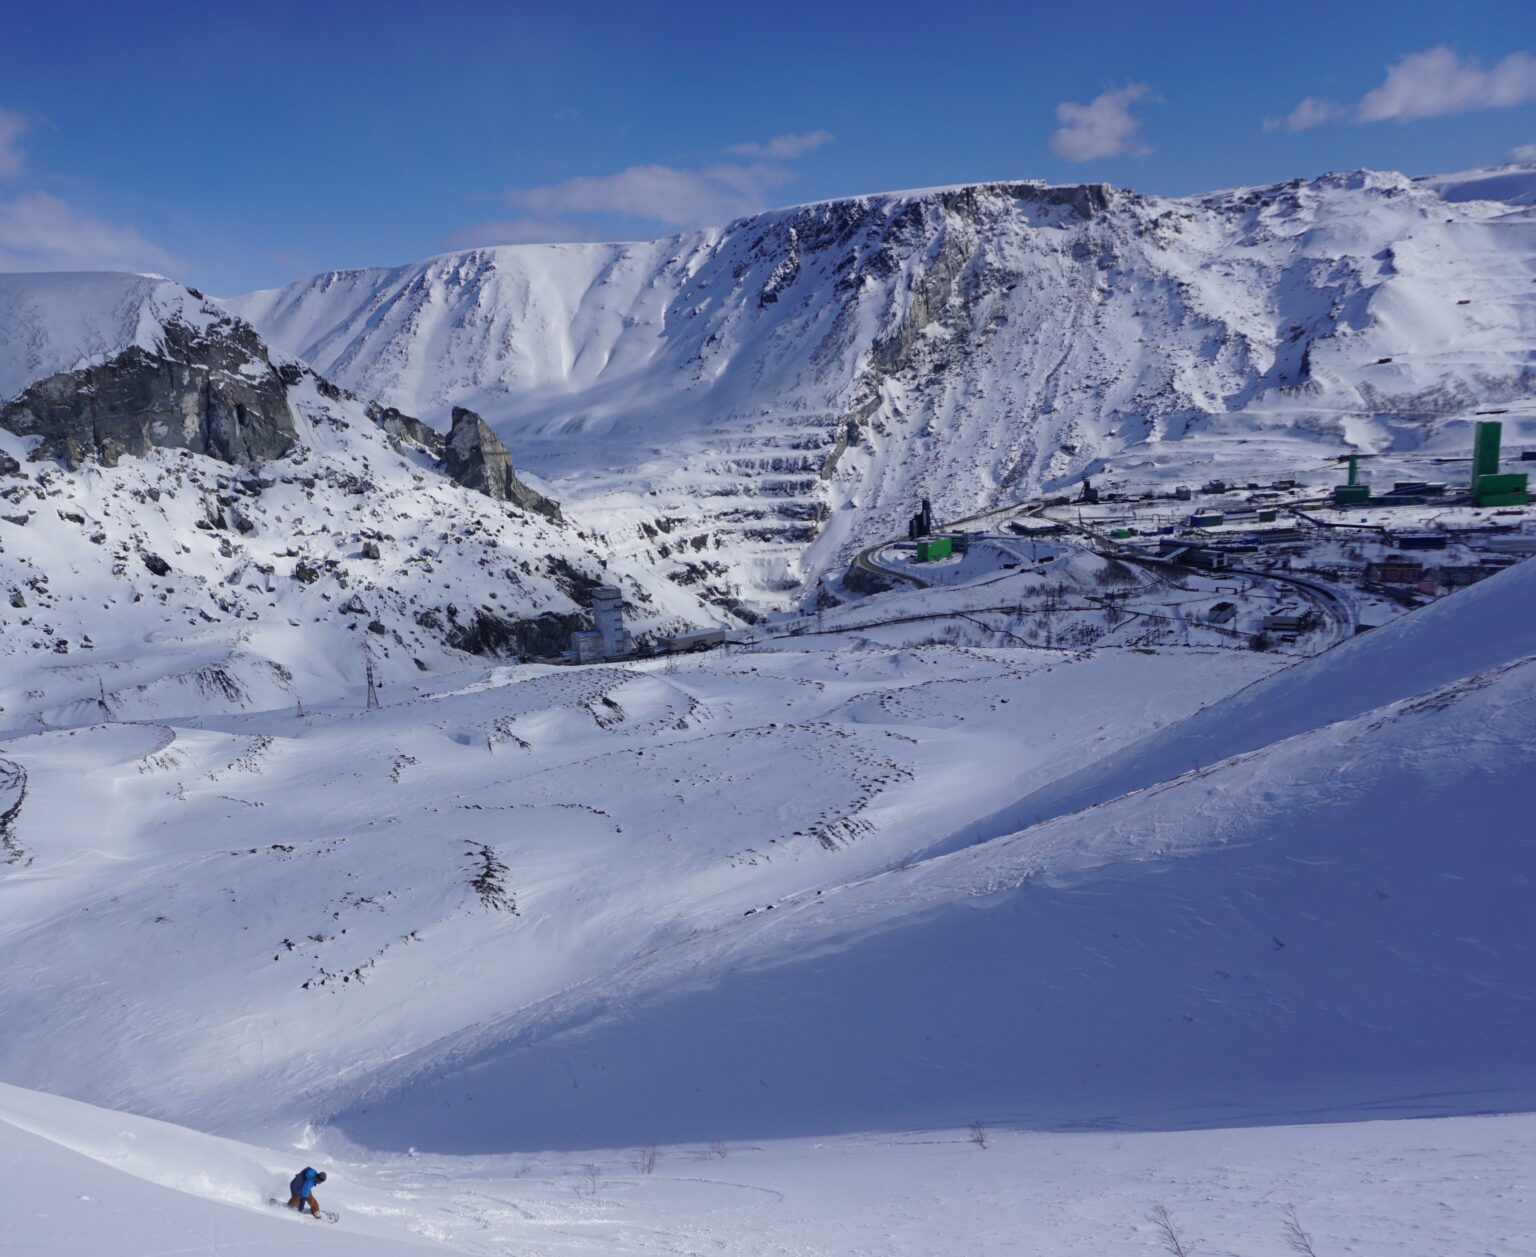 Snowboarding powder snow at the Kukisvumchorr sidecountry